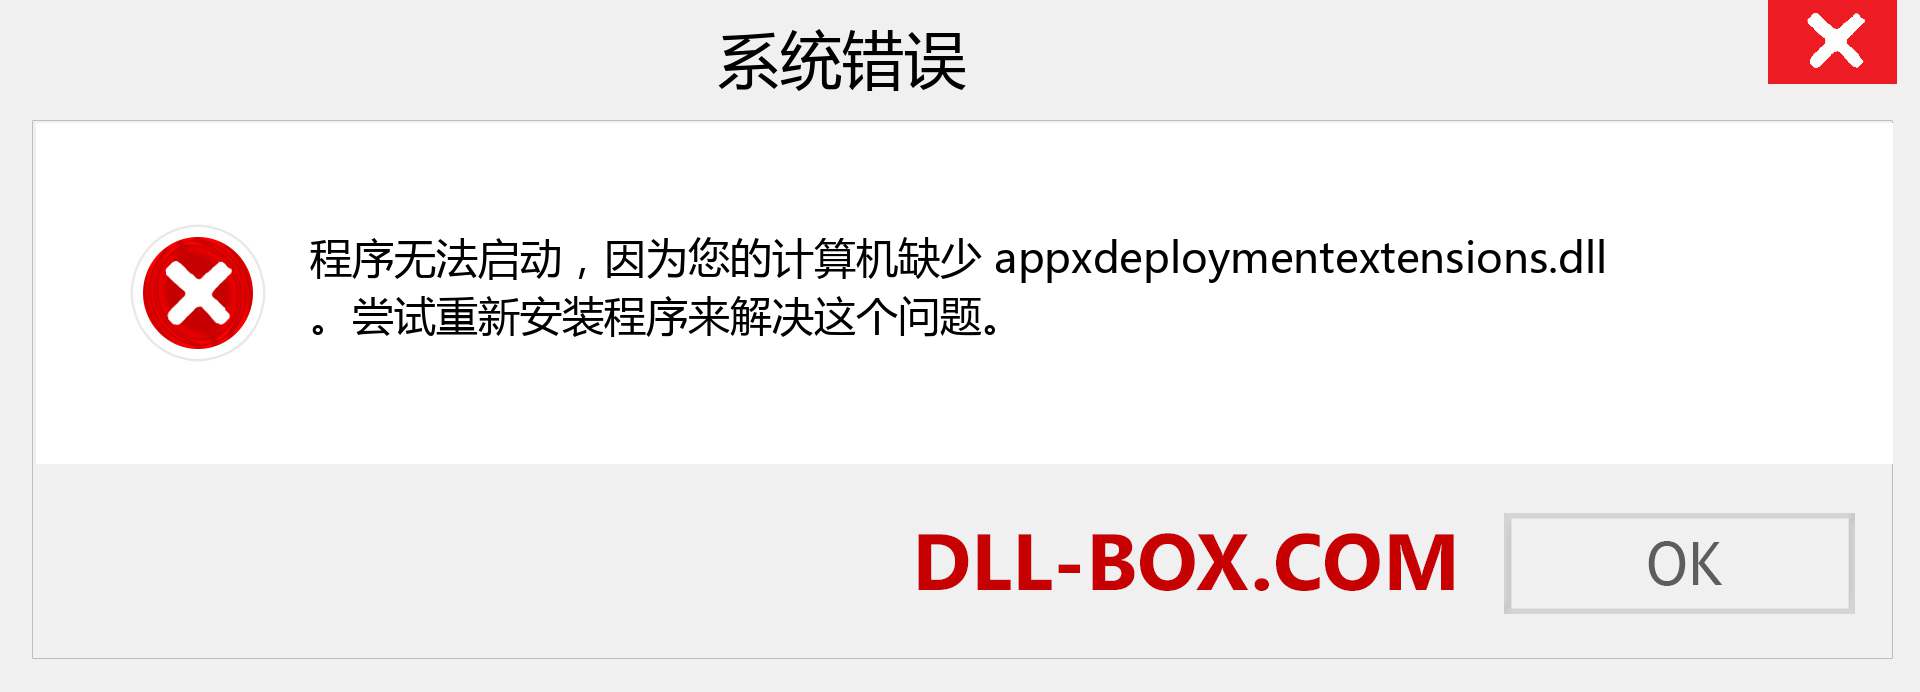 appxdeploymentextensions.dll 文件丢失？。 适用于 Windows 7、8、10 的下载 - 修复 Windows、照片、图像上的 appxdeploymentextensions dll 丢失错误